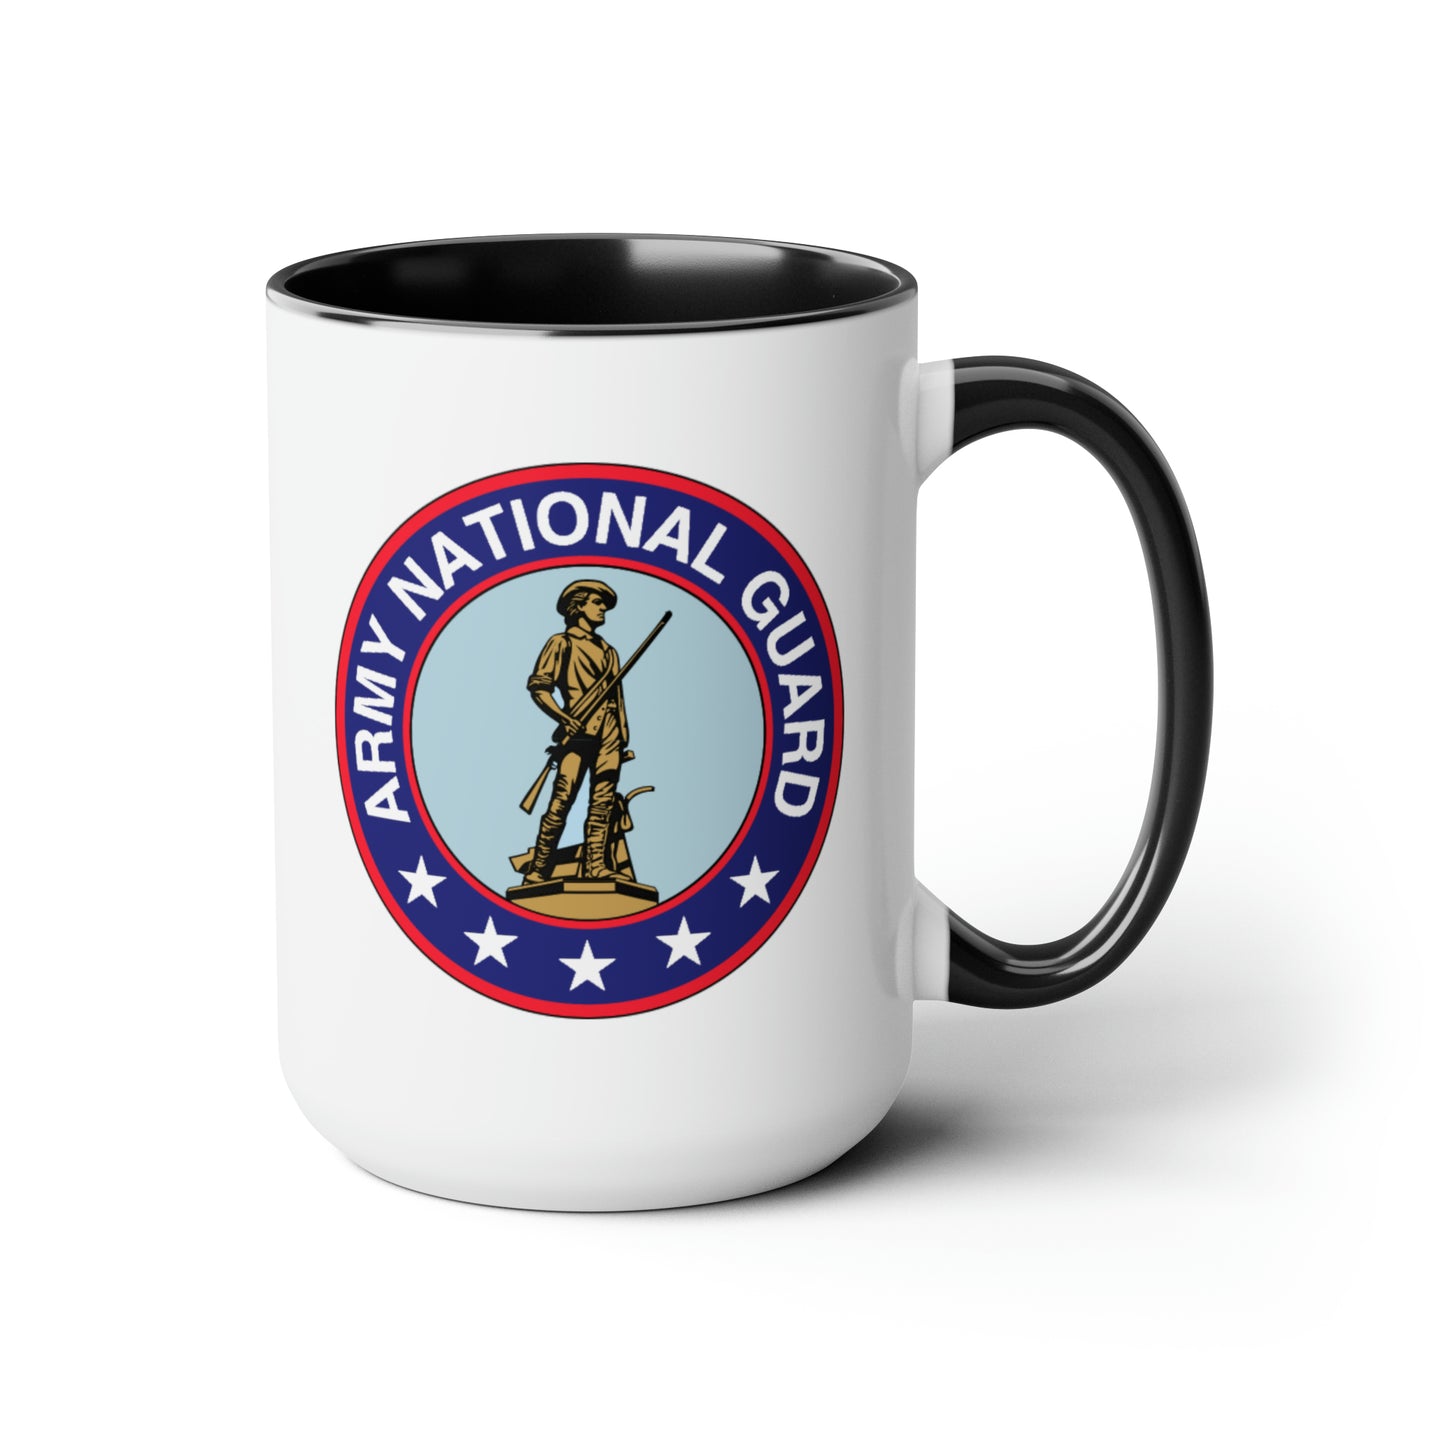 Army National Guard Coffee Mug - Double Sided Black Accent White Ceramic 15oz by TheGlassyLass.com